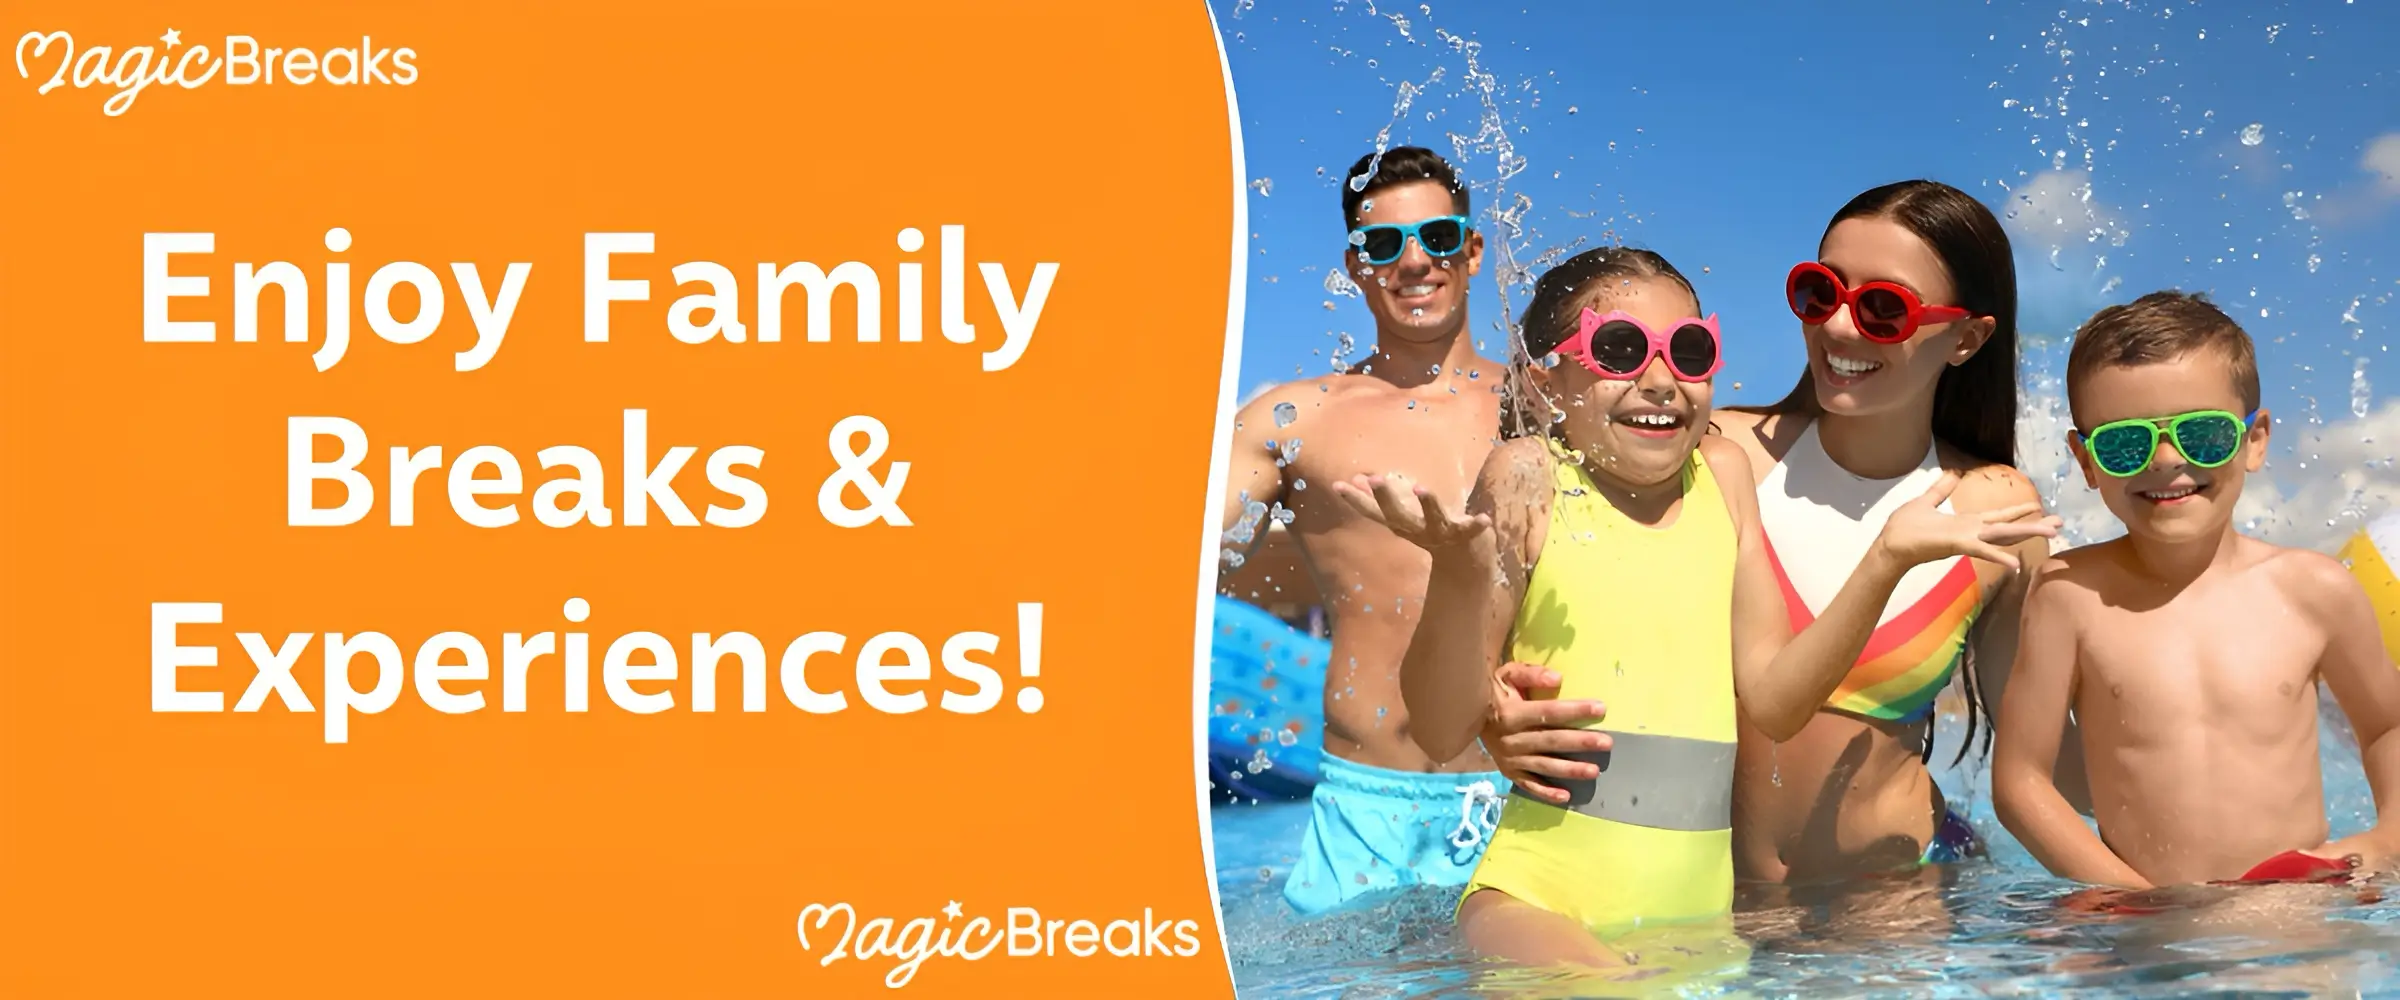 MagicBreaks Enjoy Family Breaks & Experiences! carousel banner